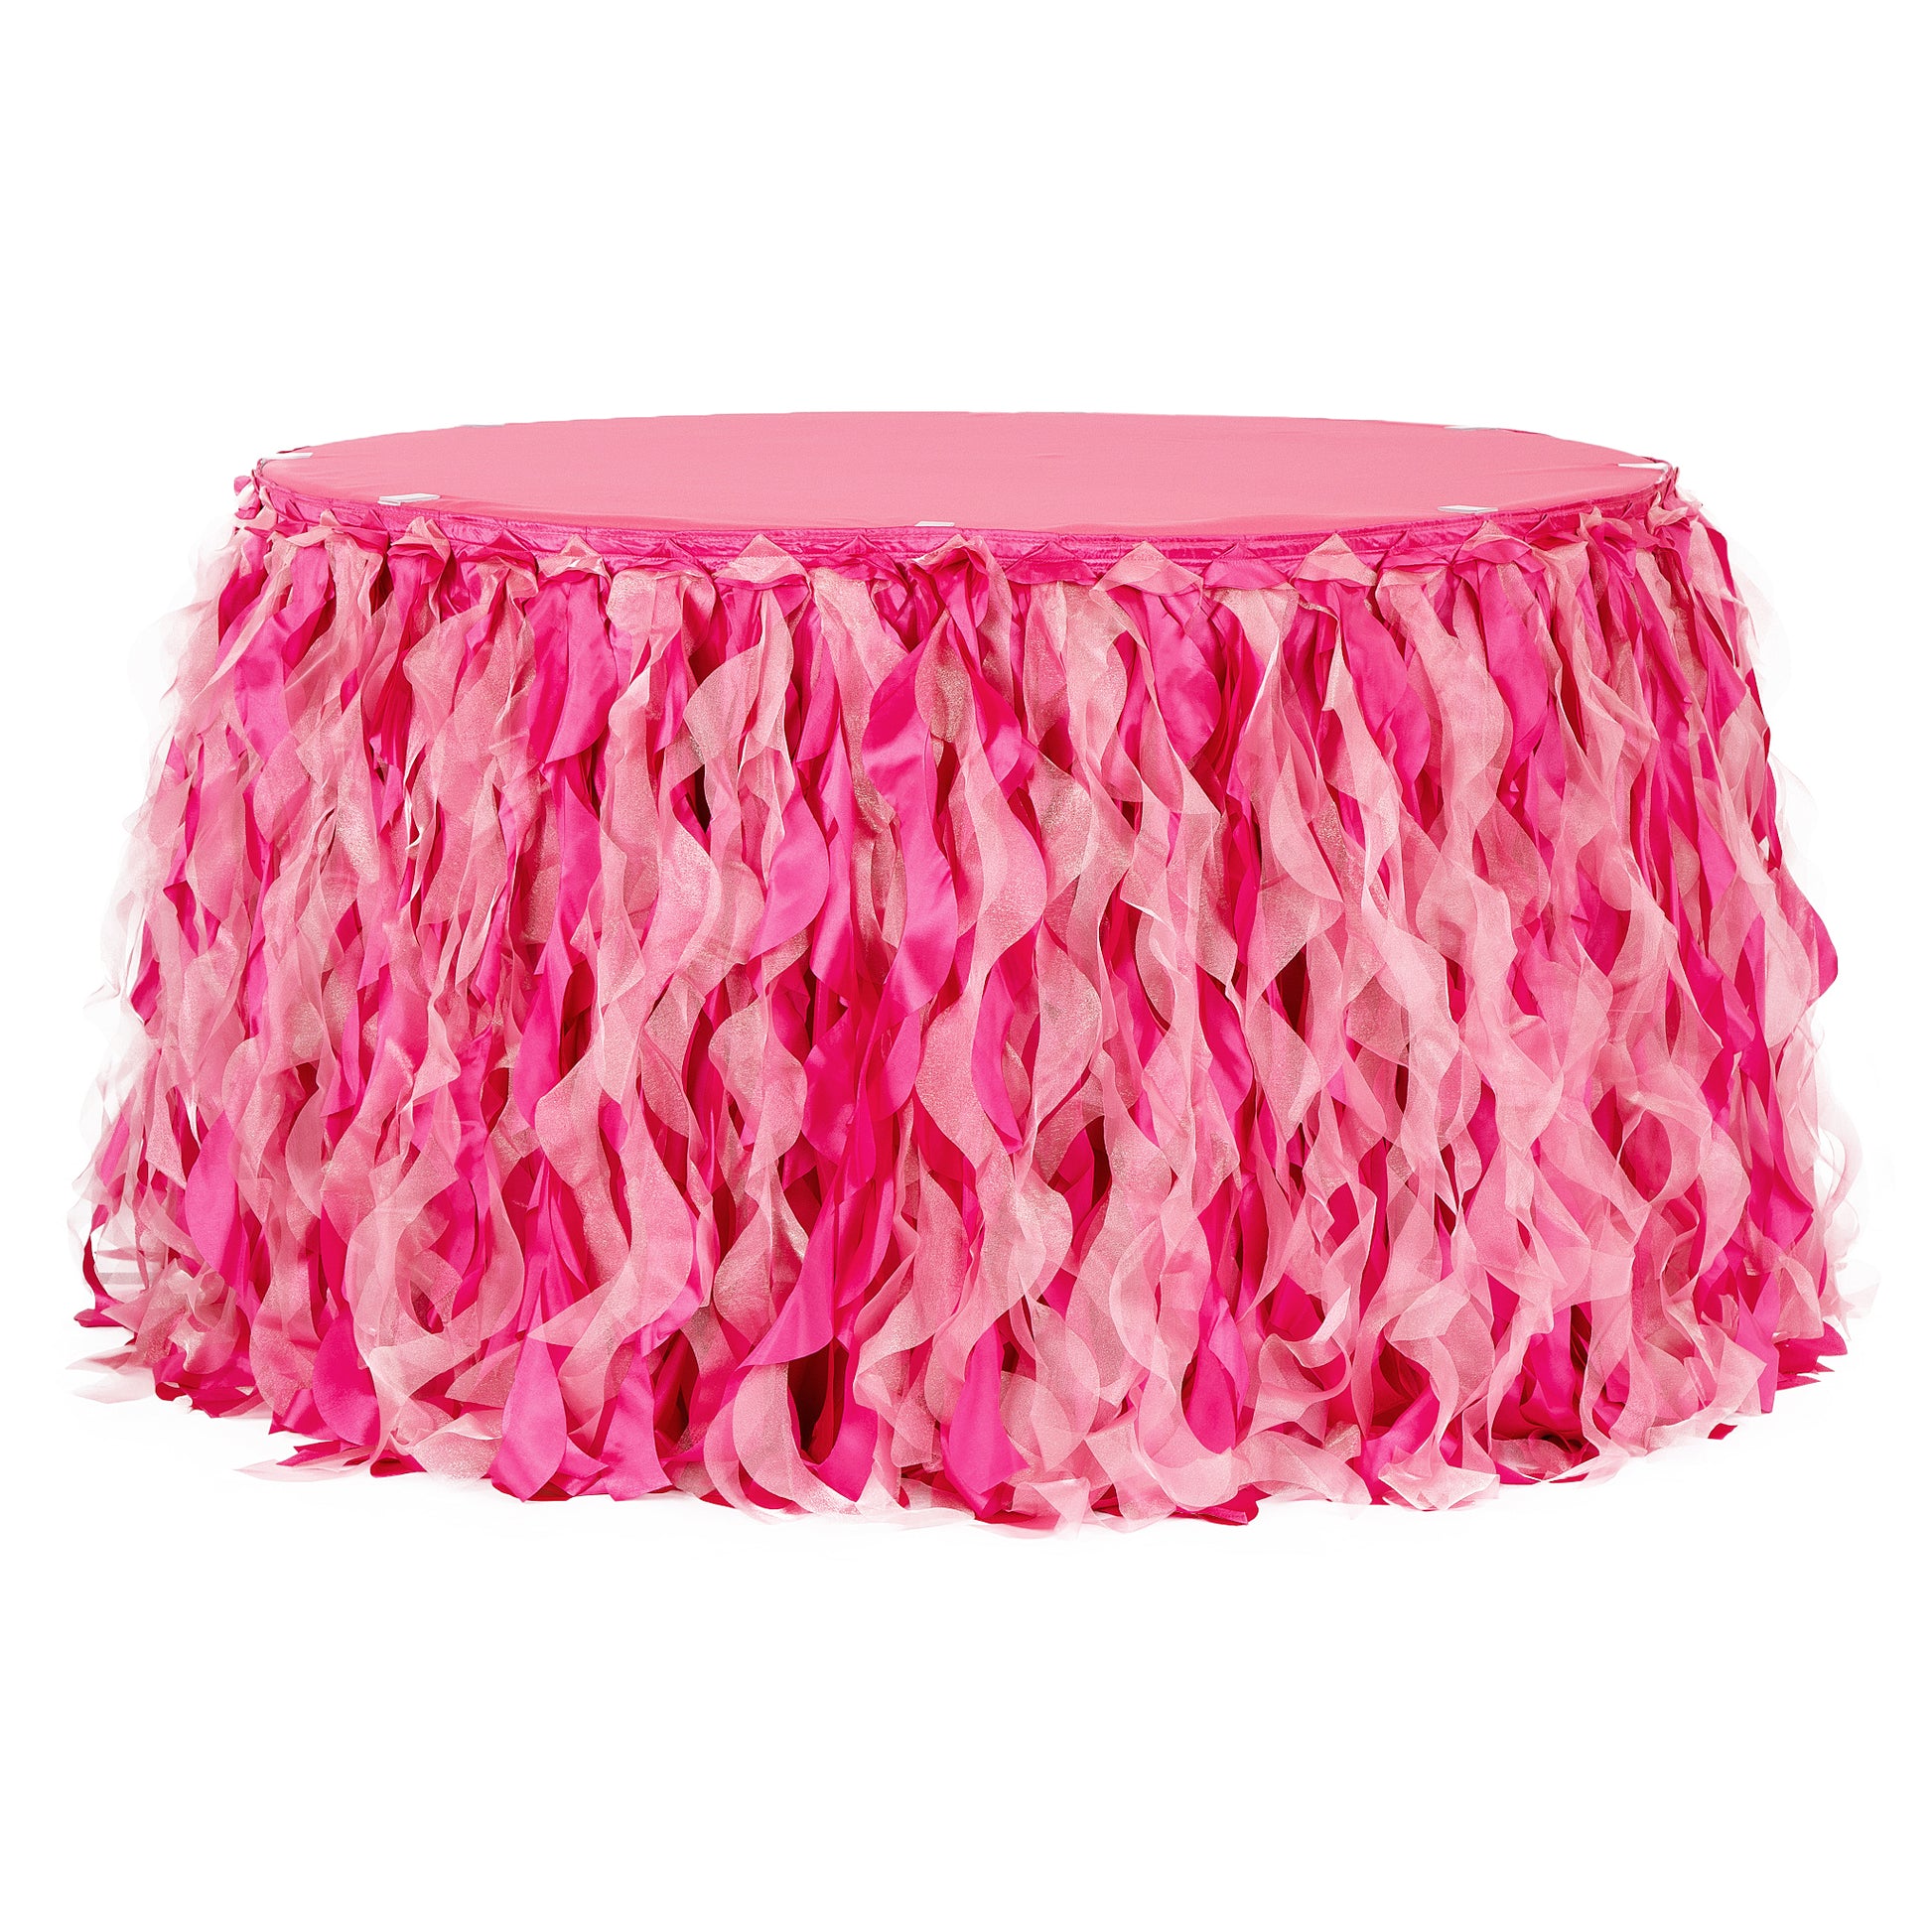 Curly Willow 17ft Table Skirt - Fuchsia - CV Linens